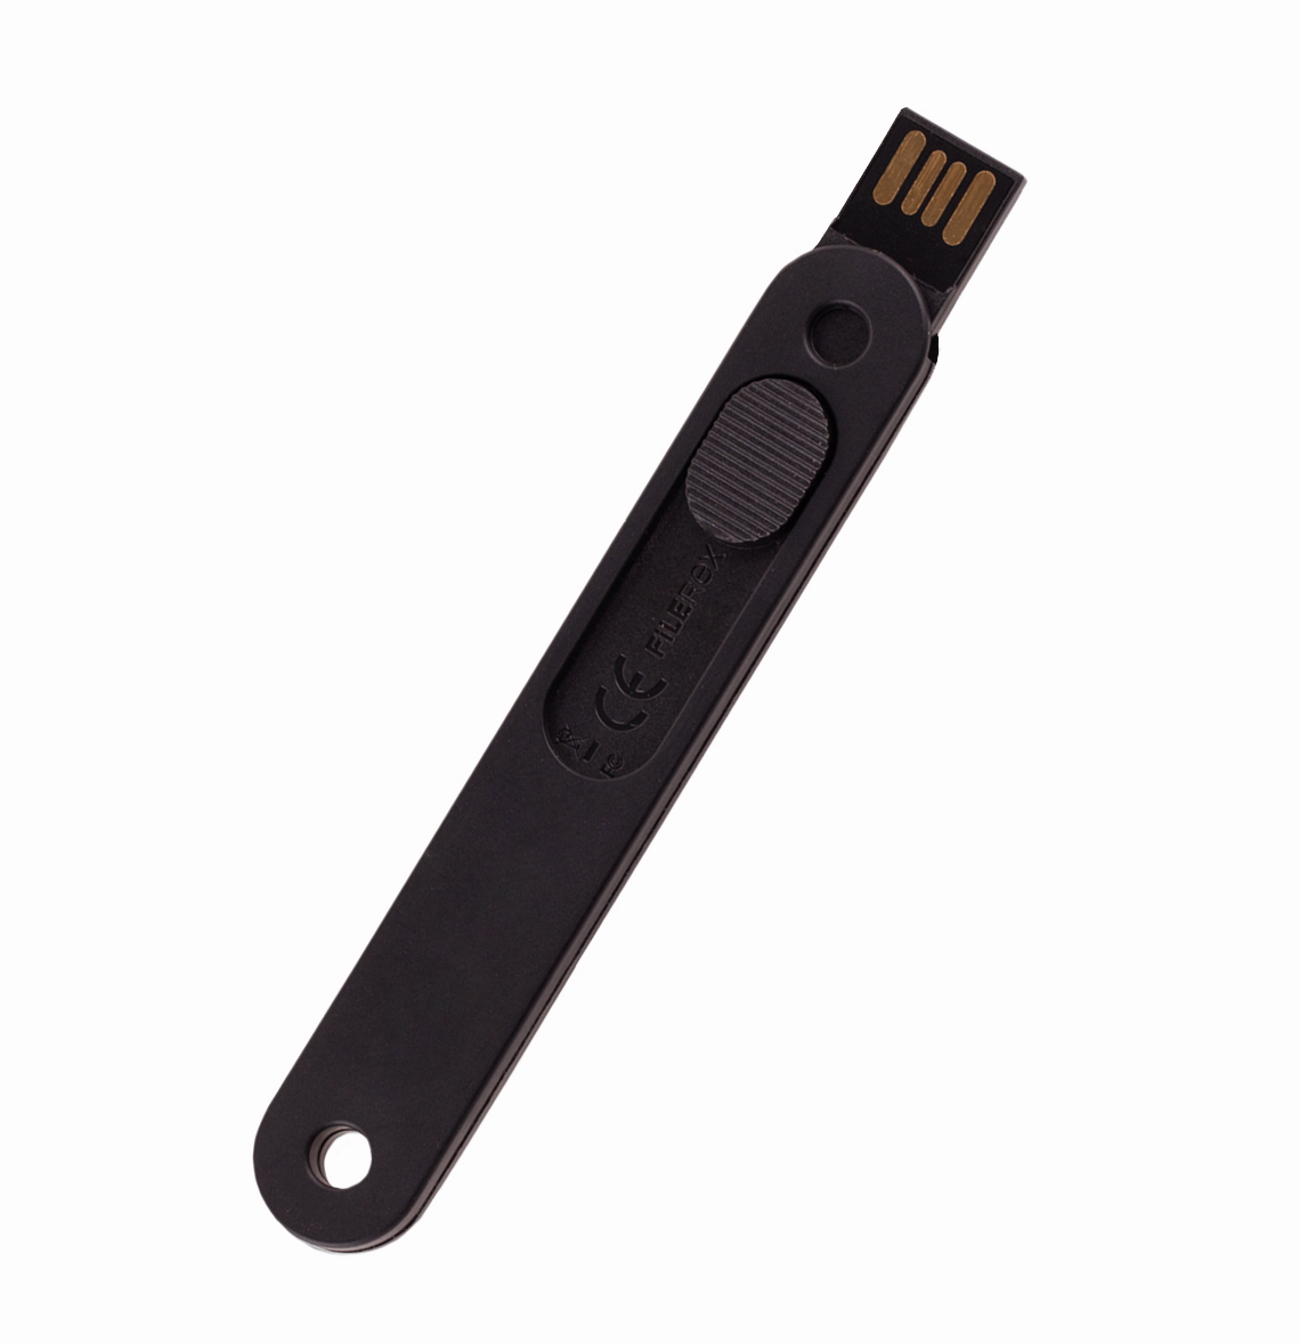 USB-Stick GB) Original Black, (Black BlackE 16GB FILEREX / - #GEN2 2.0 FiLEREX 16 - (Black)